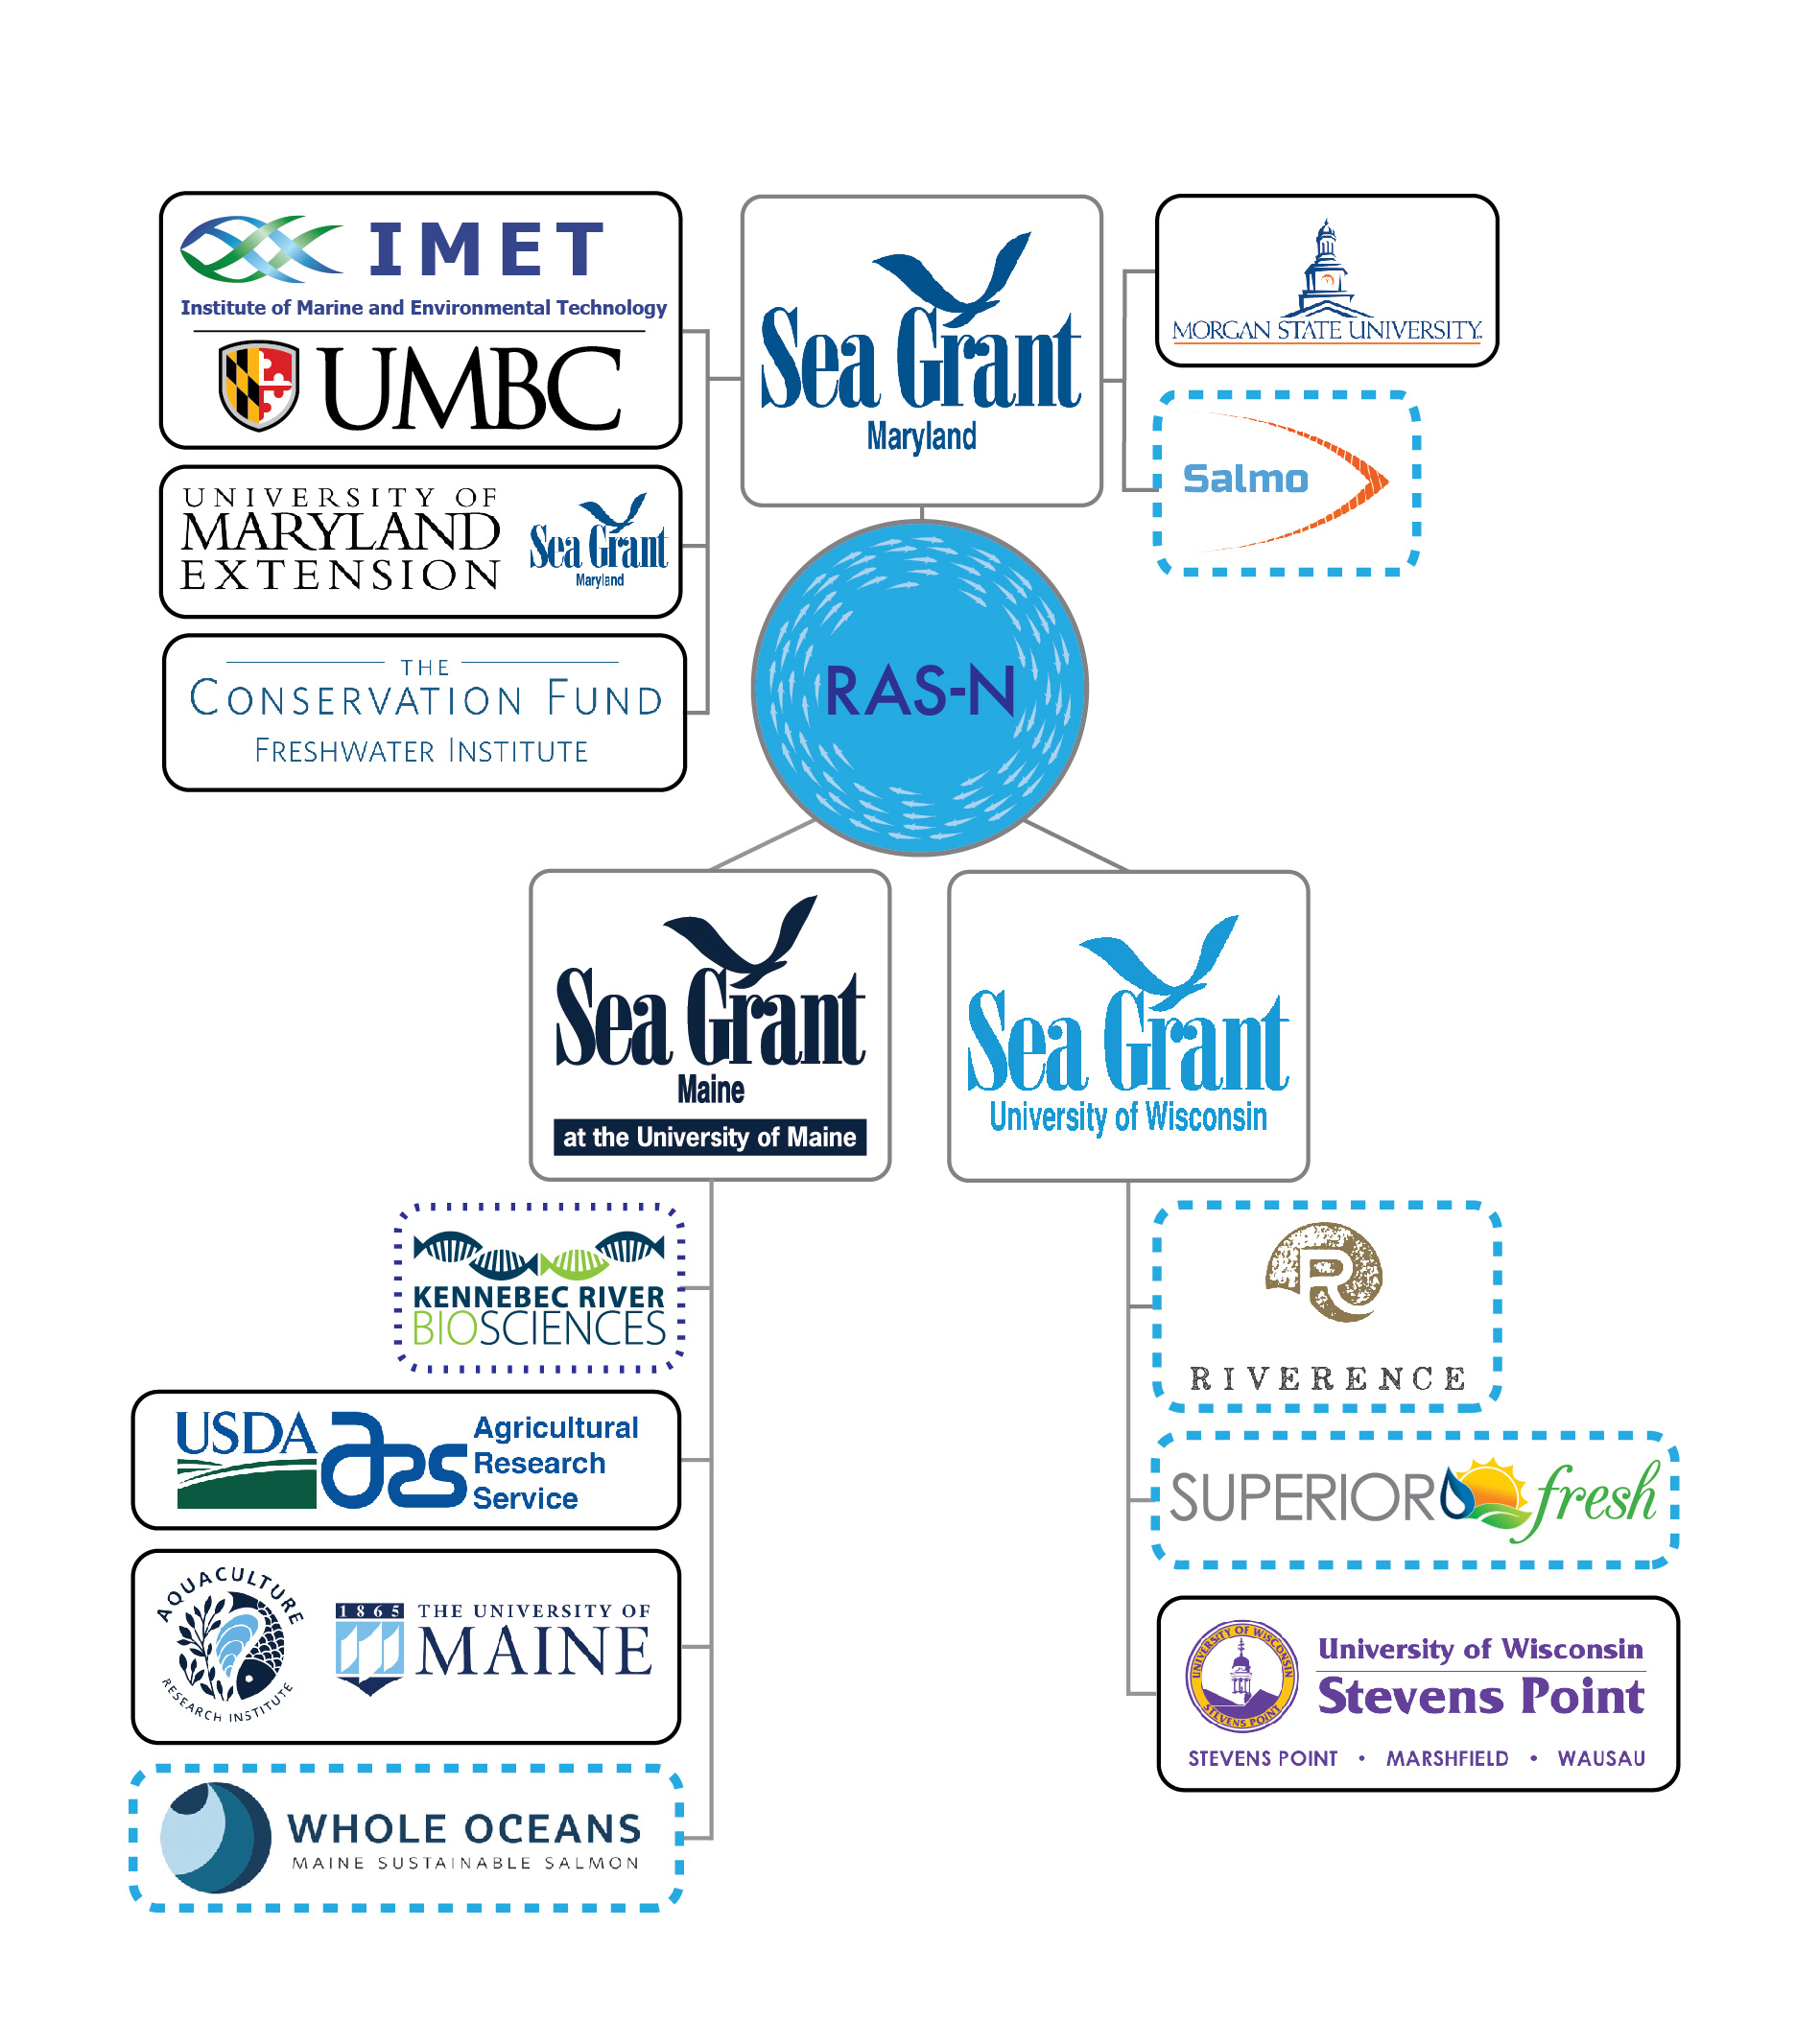 Partners in the Recirculating Aquaculture Salmon Network (RAS-N)